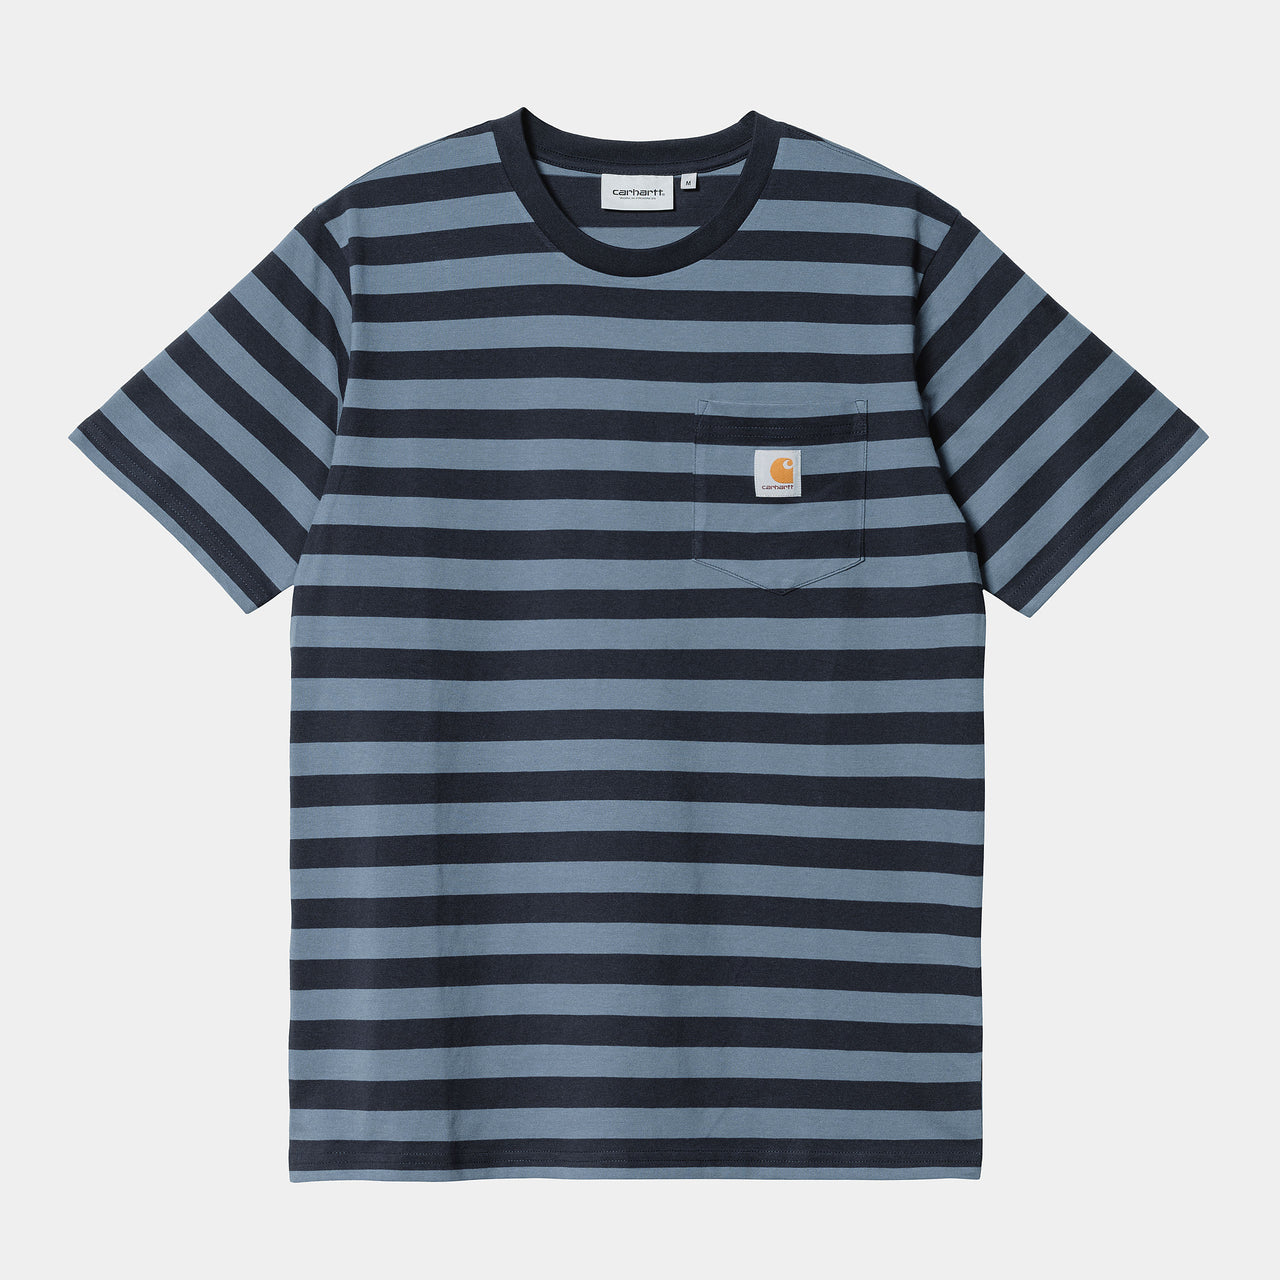 S/S Merrick Pocket T-Shirt Dark Navy / Storm Blue